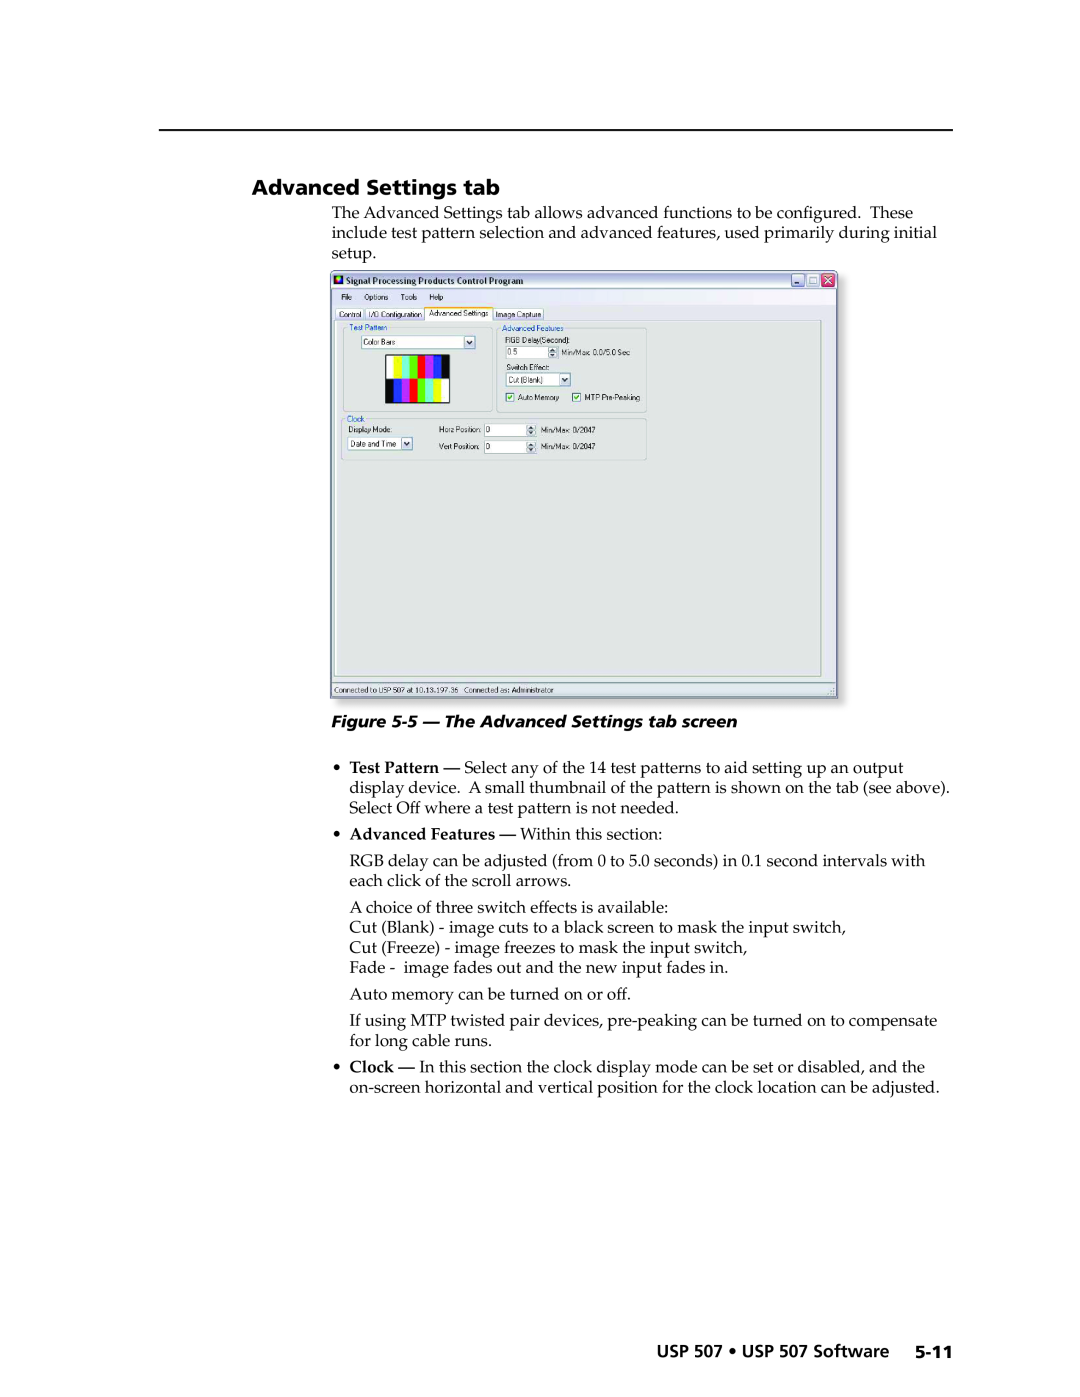 Extron electronic manual 5— The Advanced Settings tab screen, USP 507 USP 507 Software 